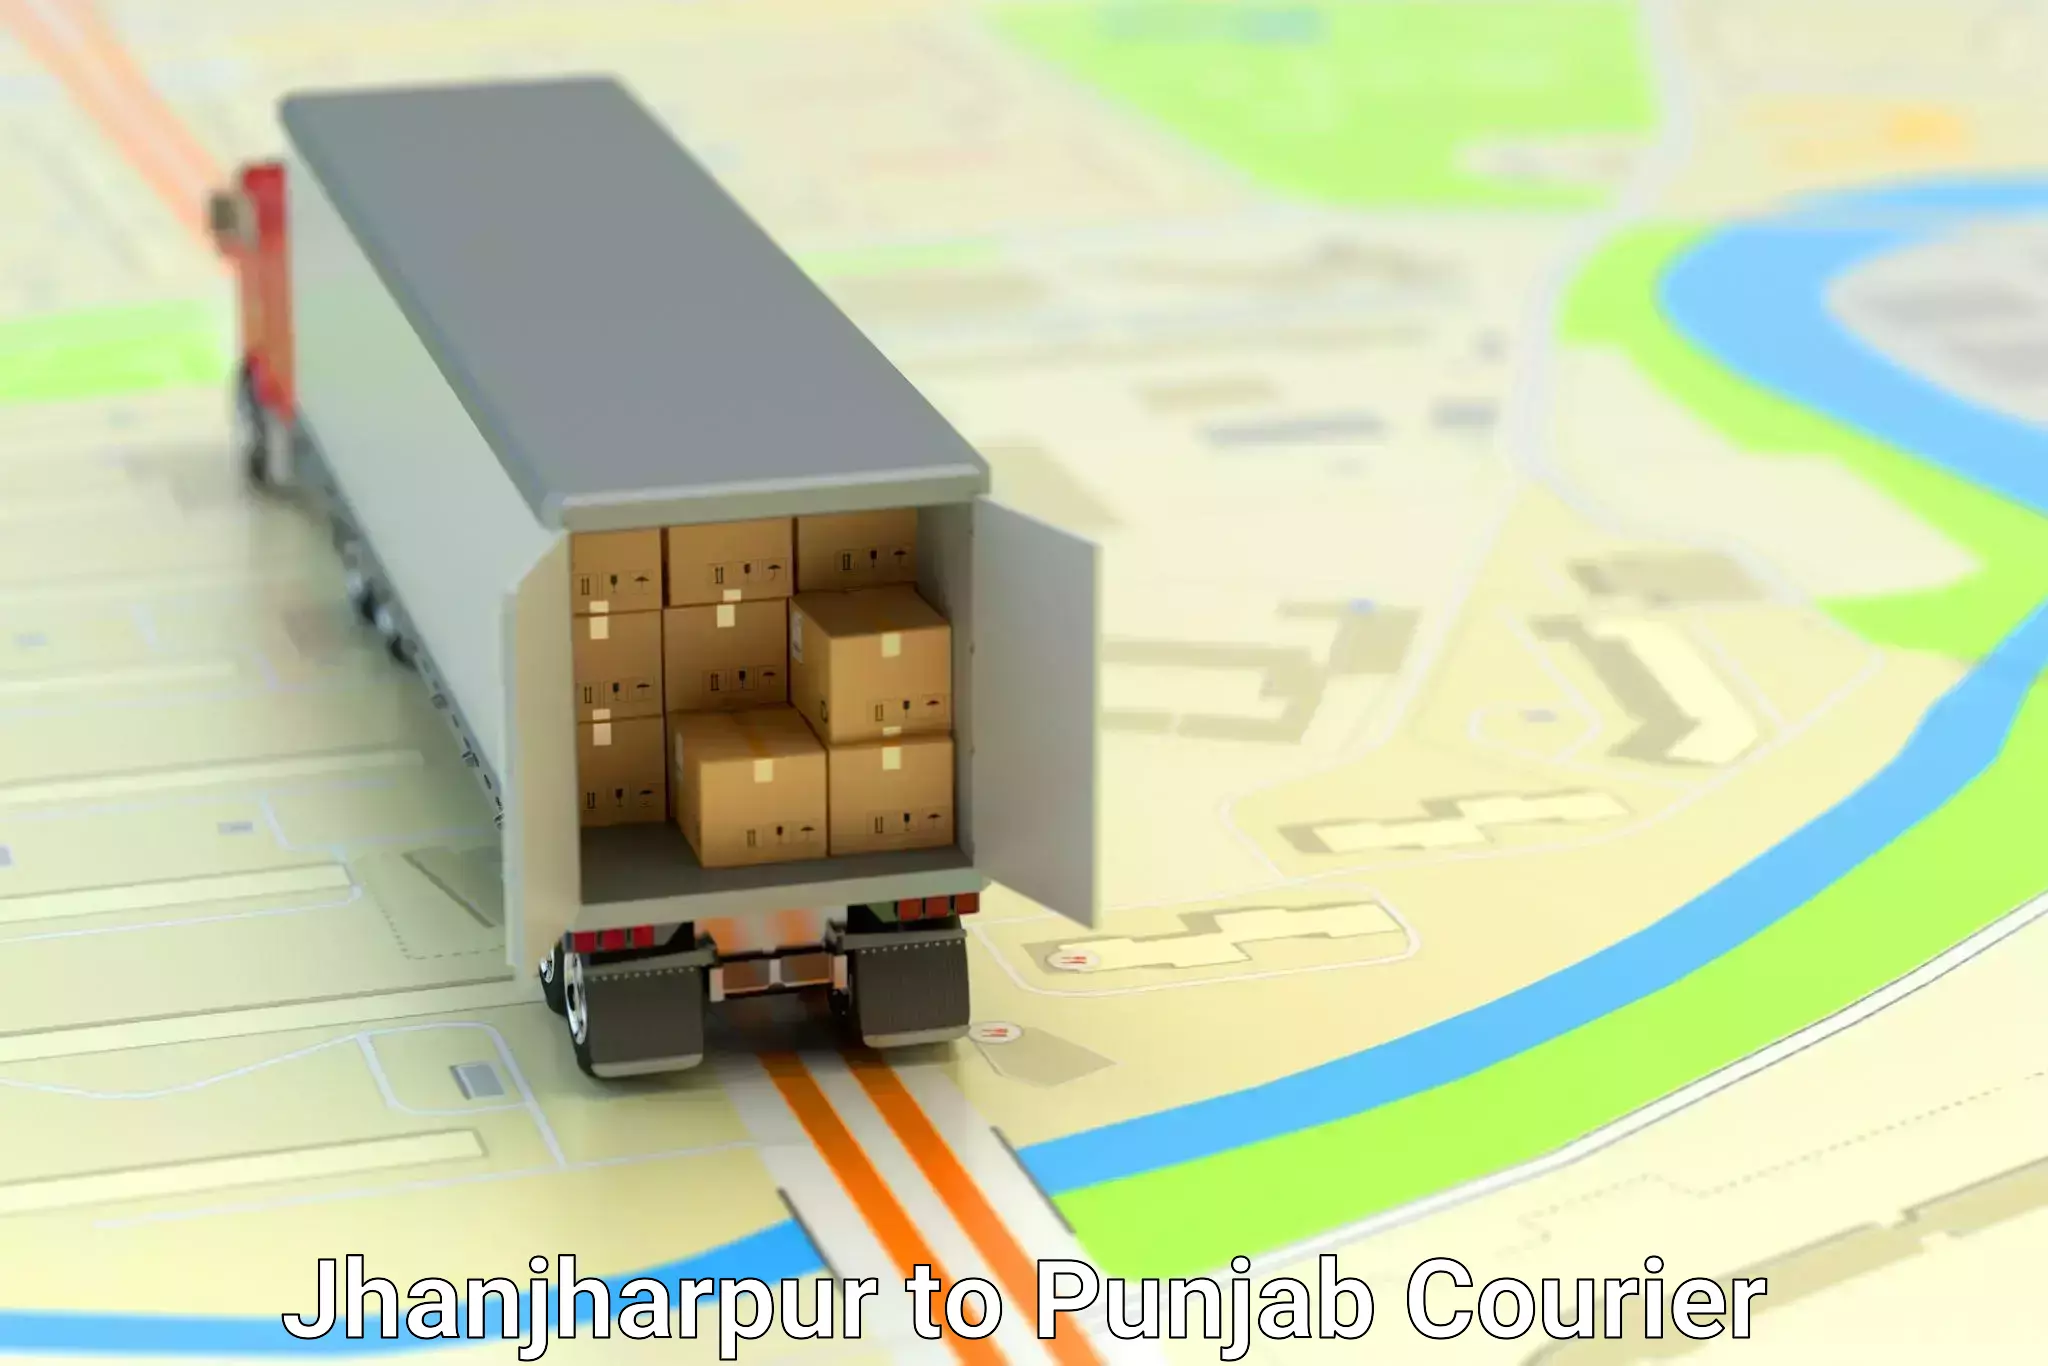 Efficient relocation services Jhanjharpur to Jalandhar